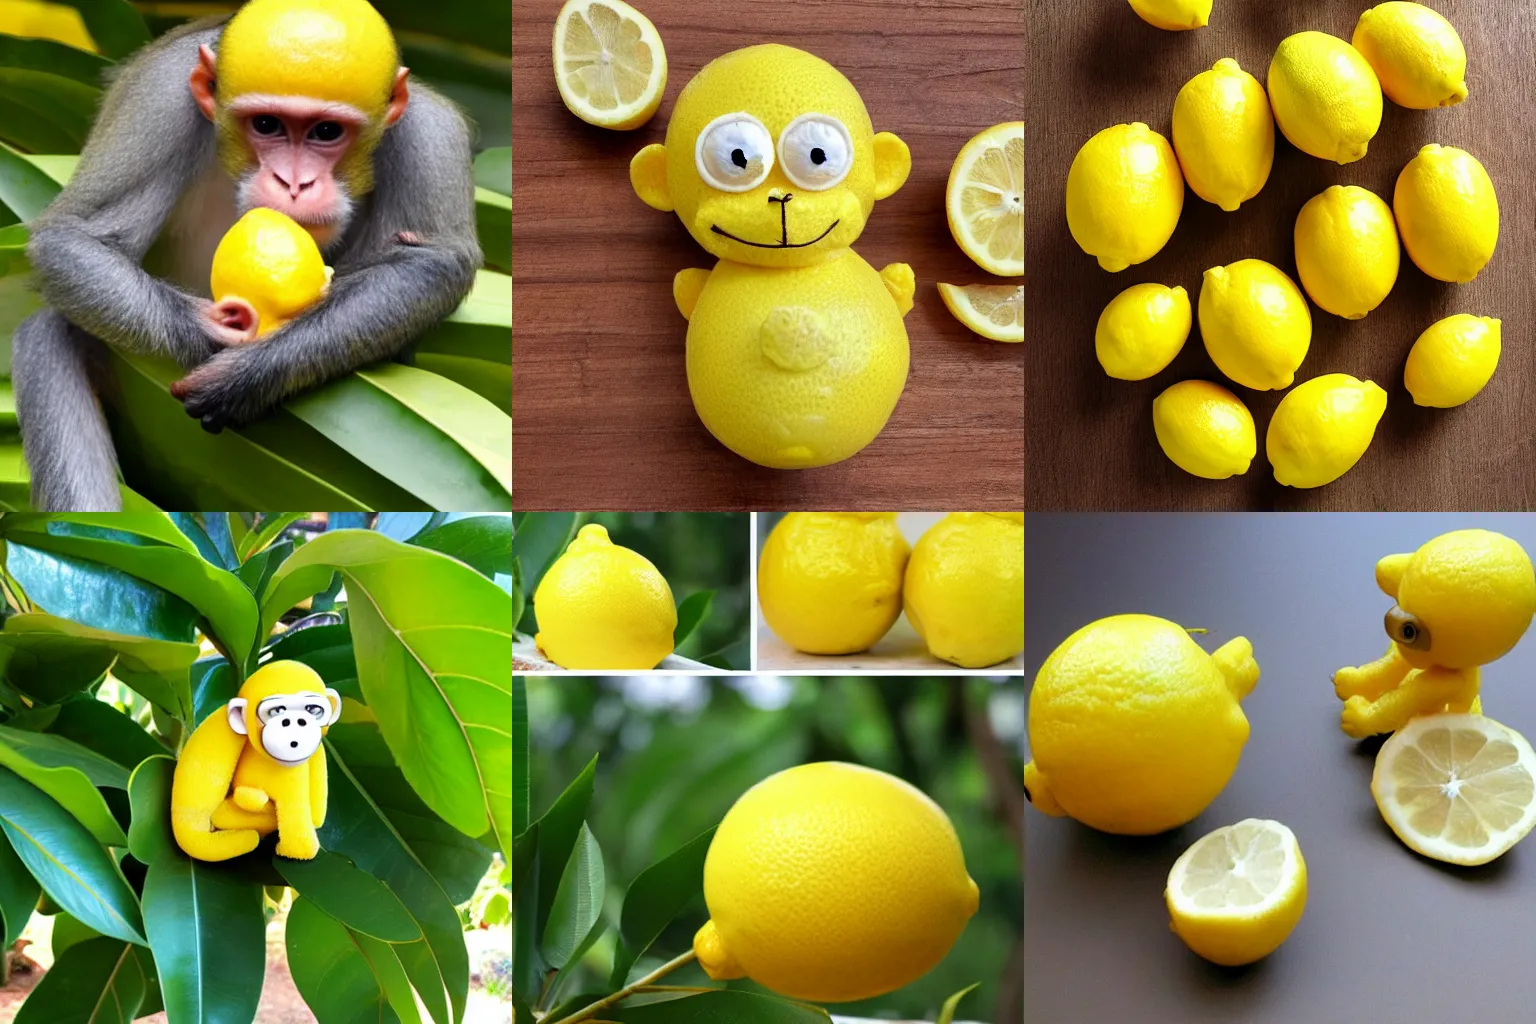 Prompt: lemon monkey, monkey made out of lemon, monkey having the texture of lemon with yellow lemon skin